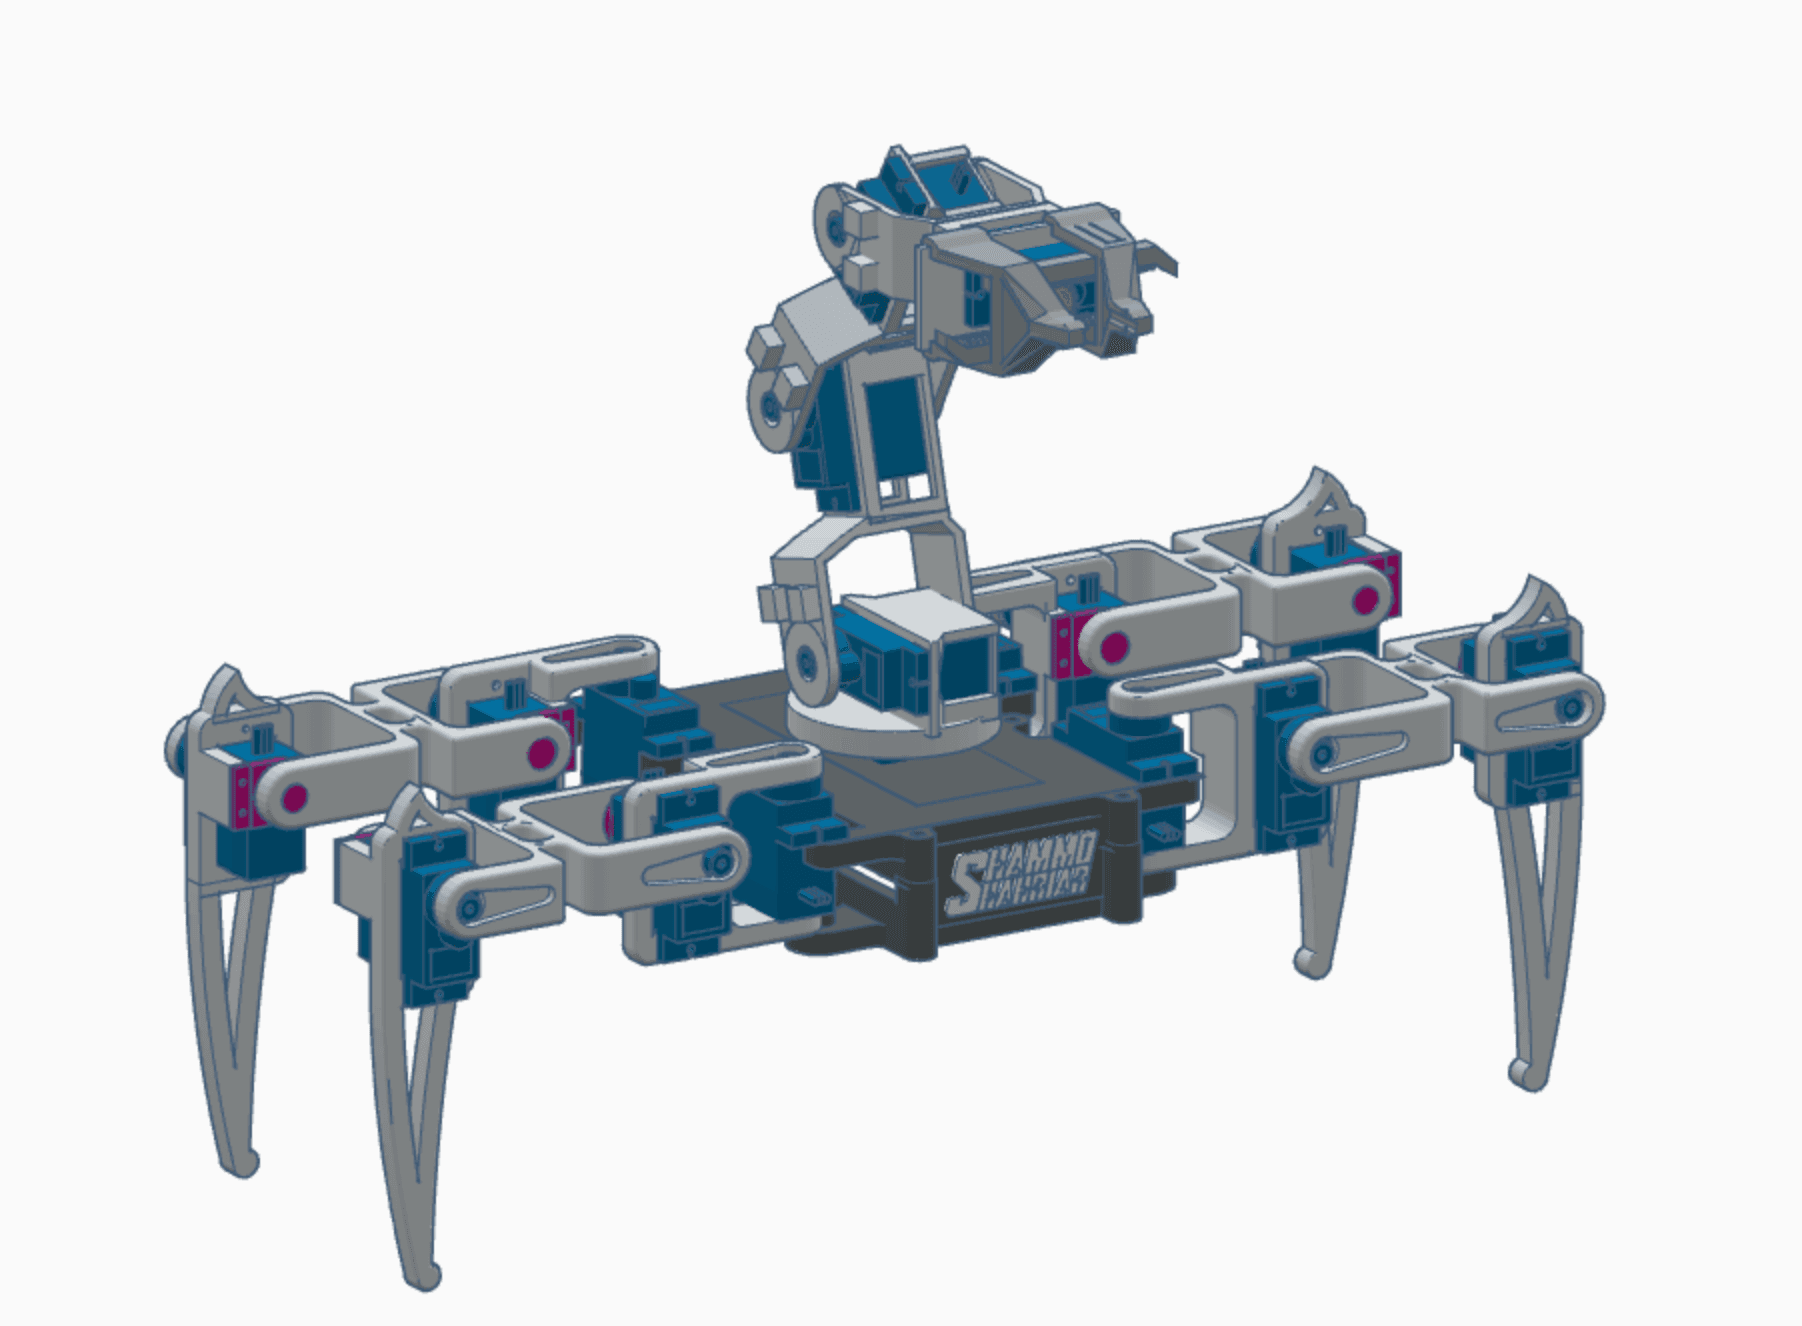 Spidy: The Spider Robot 3d model